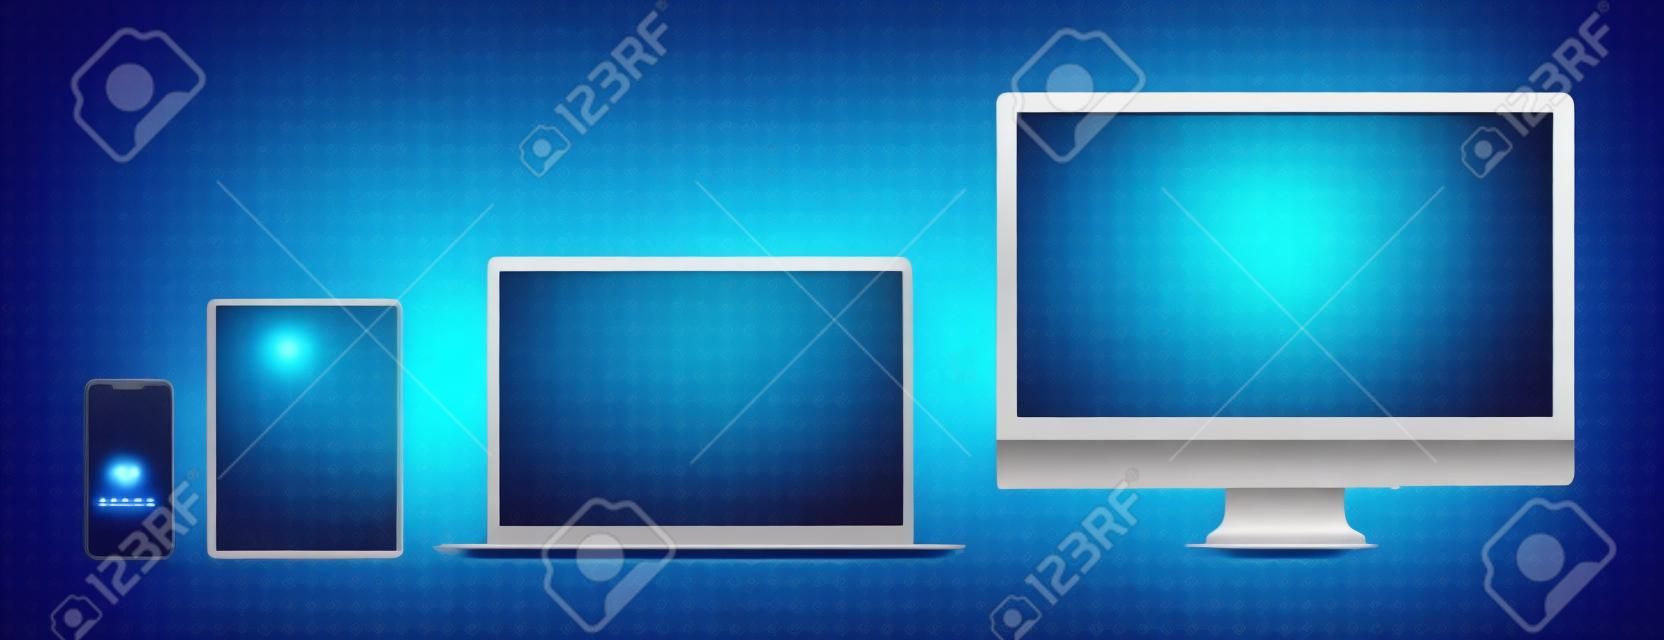 Realistic set of Monitor, laptop, tablet, smartphone on transparent background. Mockup set of device. Vector illustration